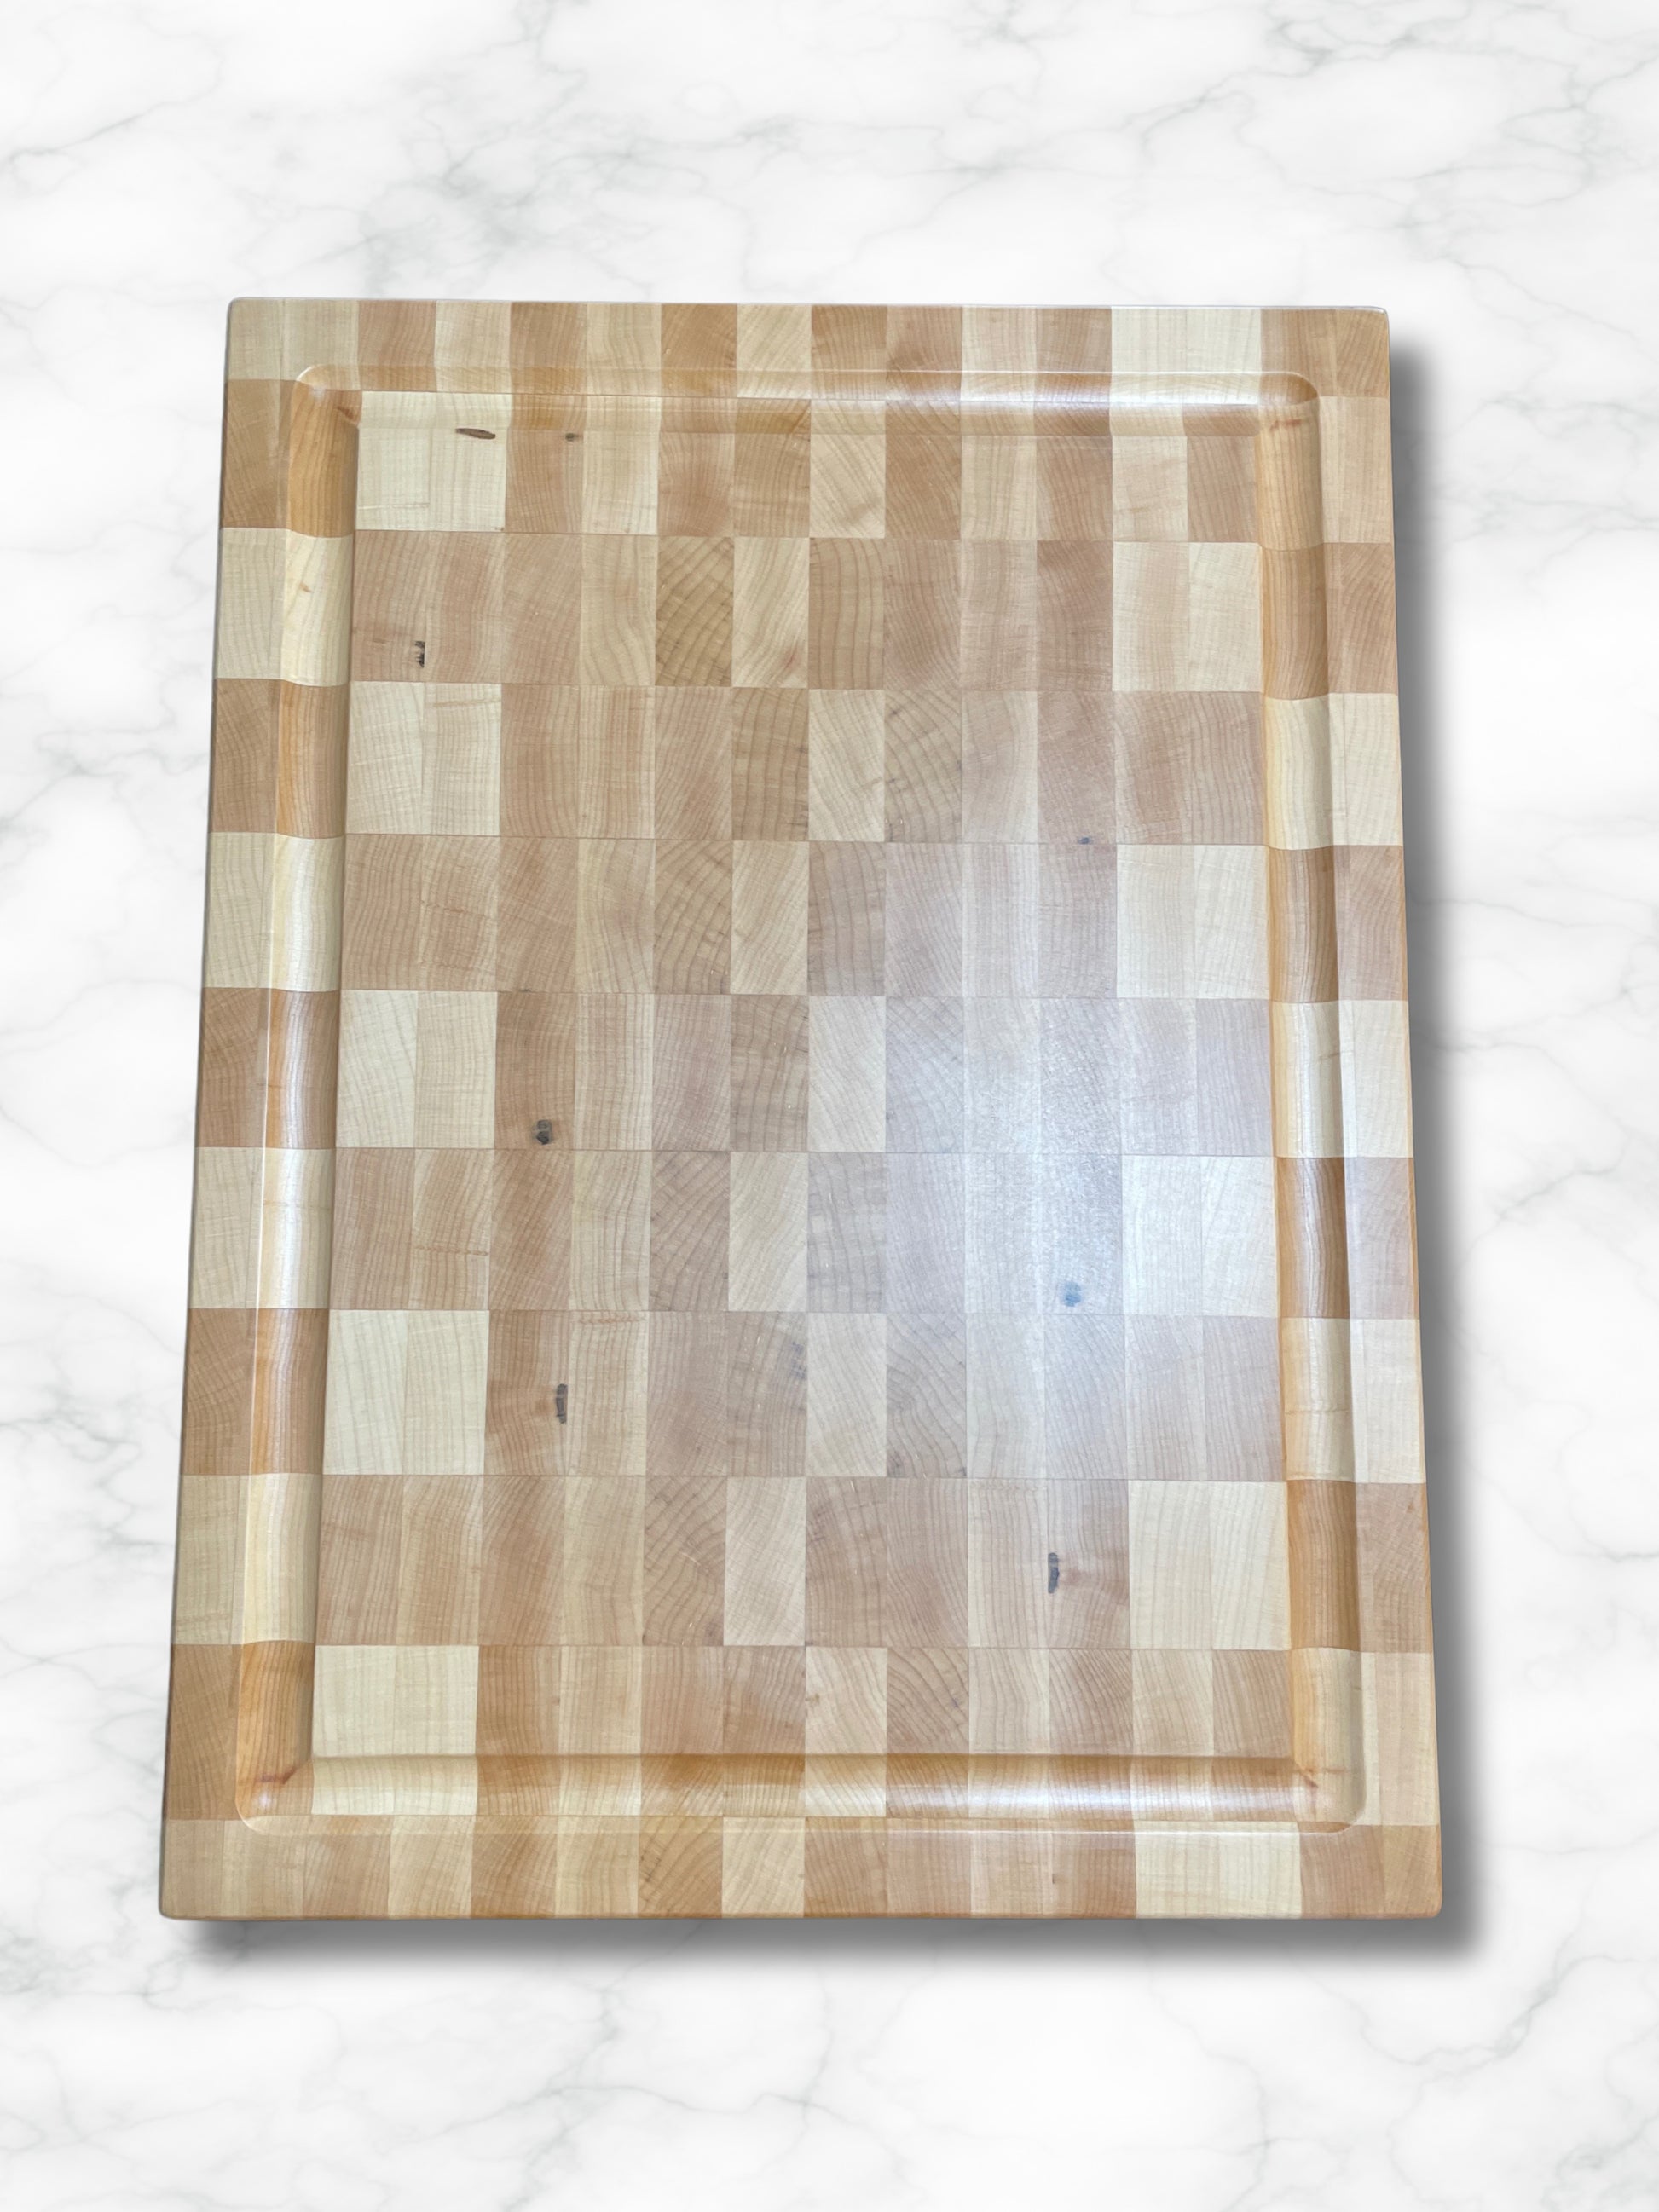 custom handmade end grain maple wood cutting board, top view